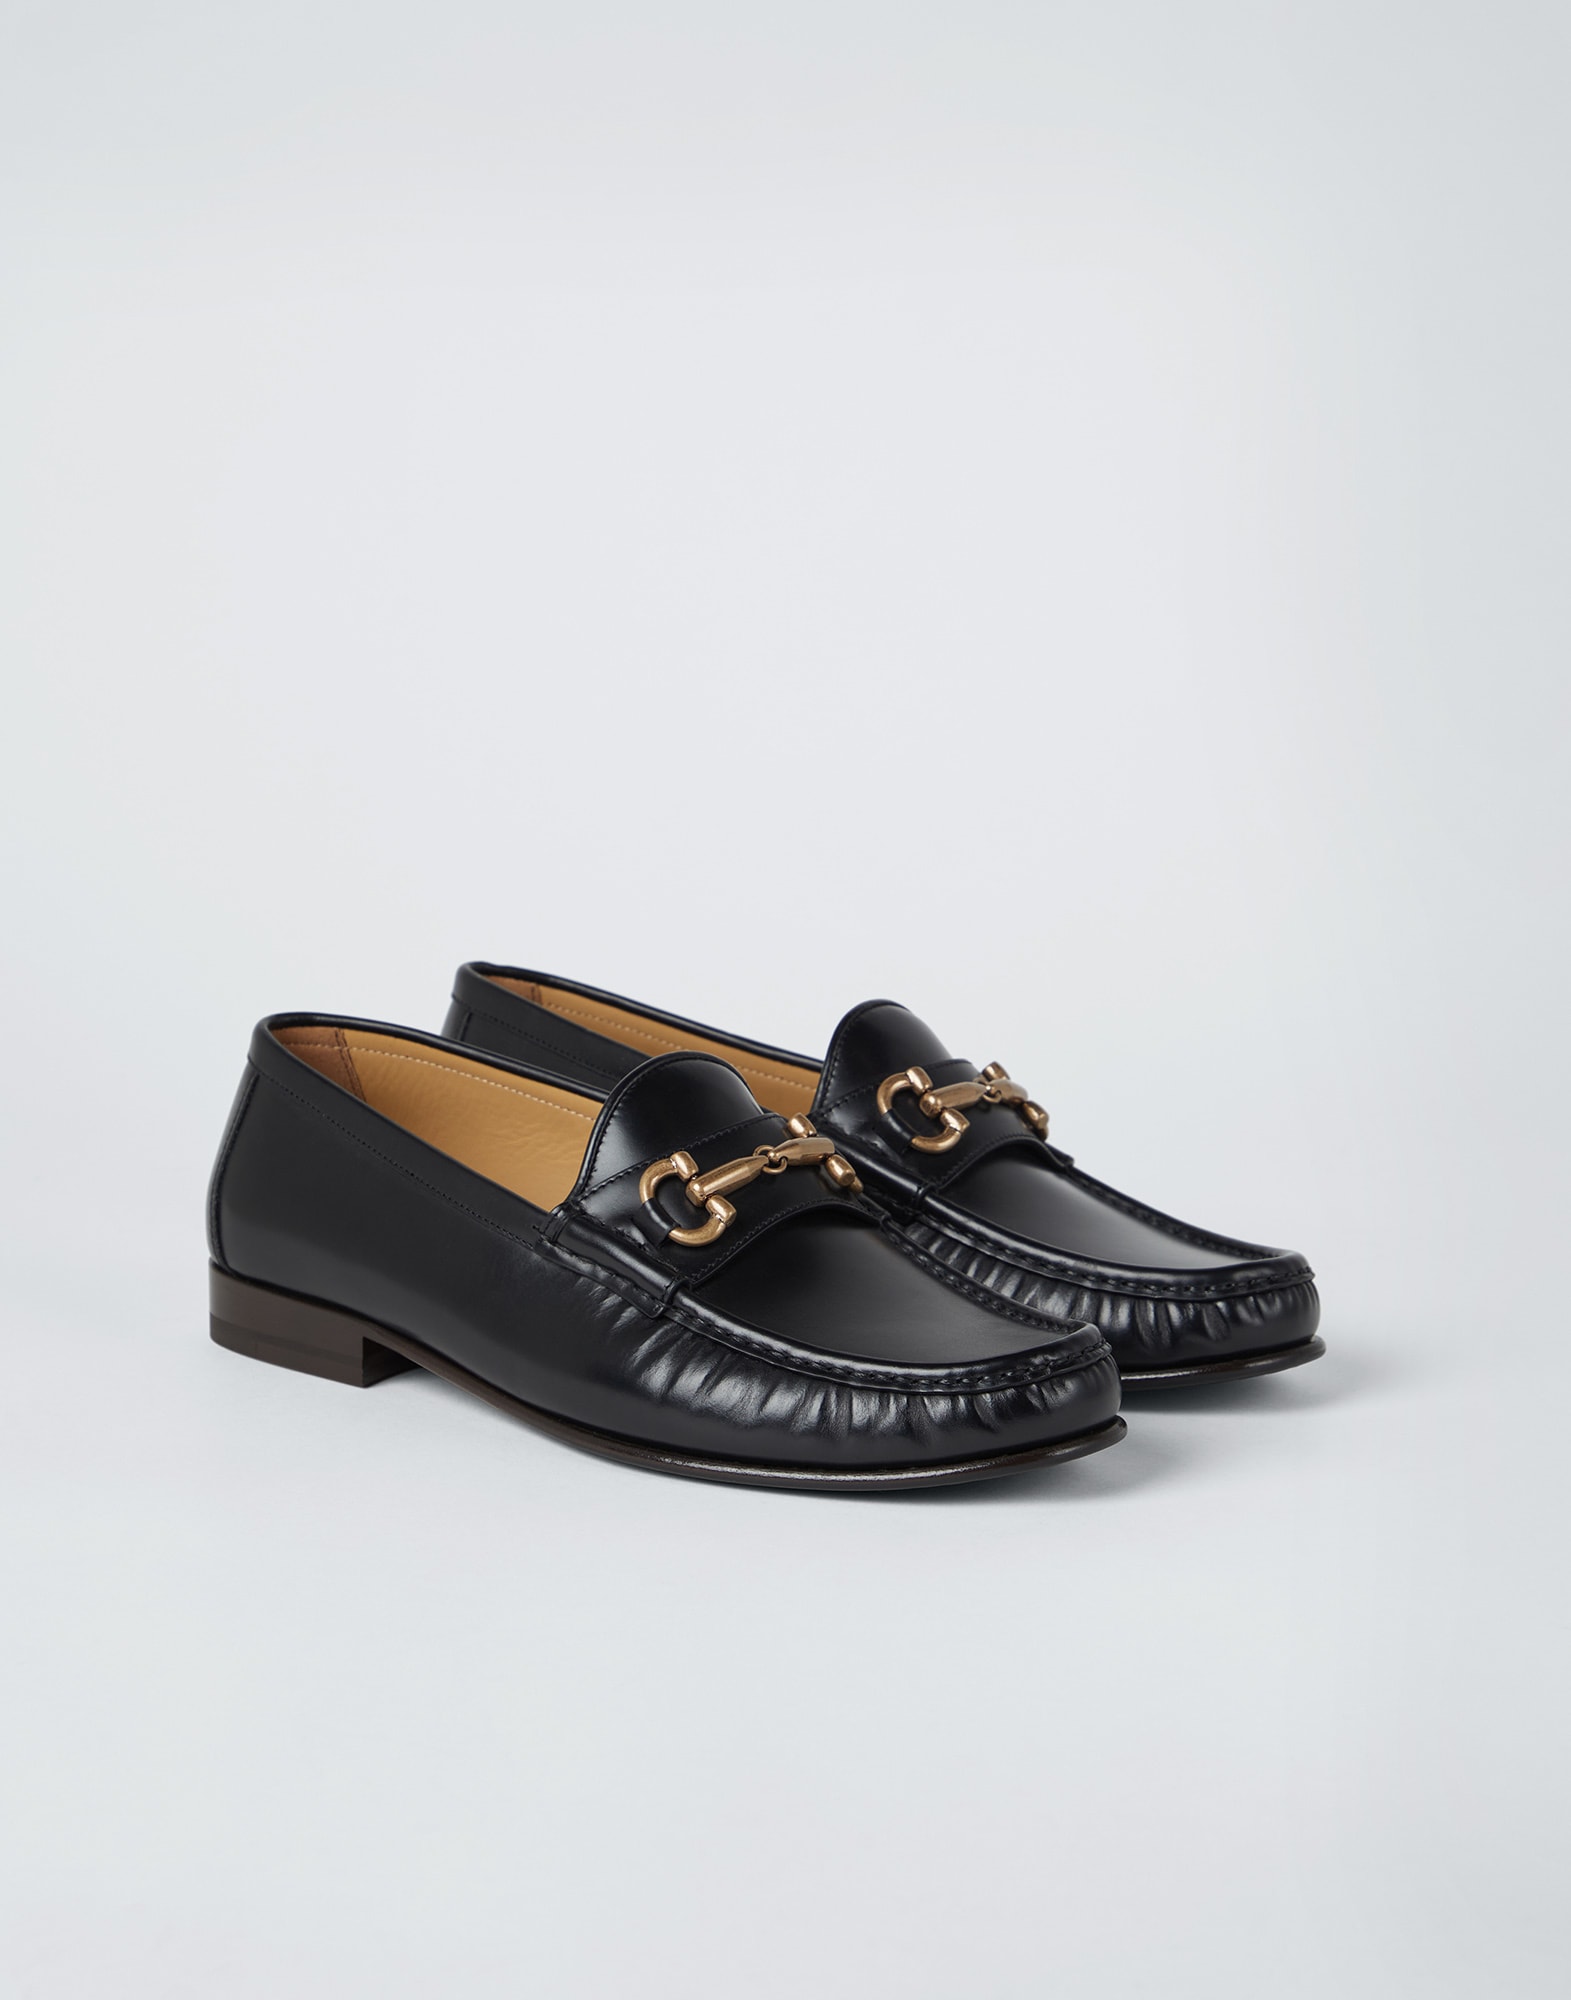 Antique calfskin loafers (241MZUVRNV797) for Man | Brunello Cucinelli